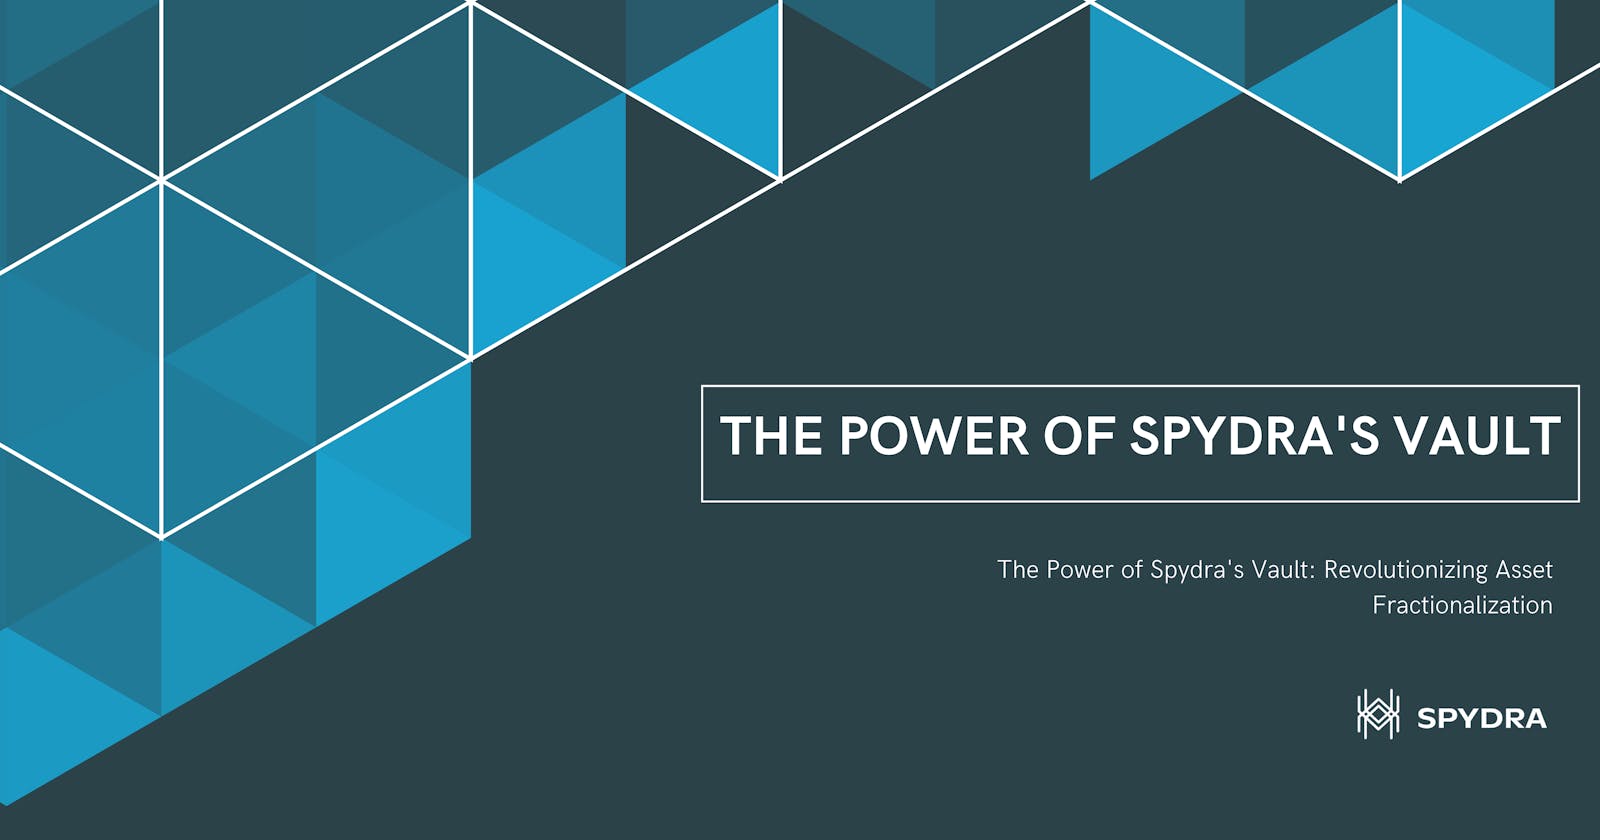 The Power of Spydra's Vault: Revolutionizing Asset Fractionalization